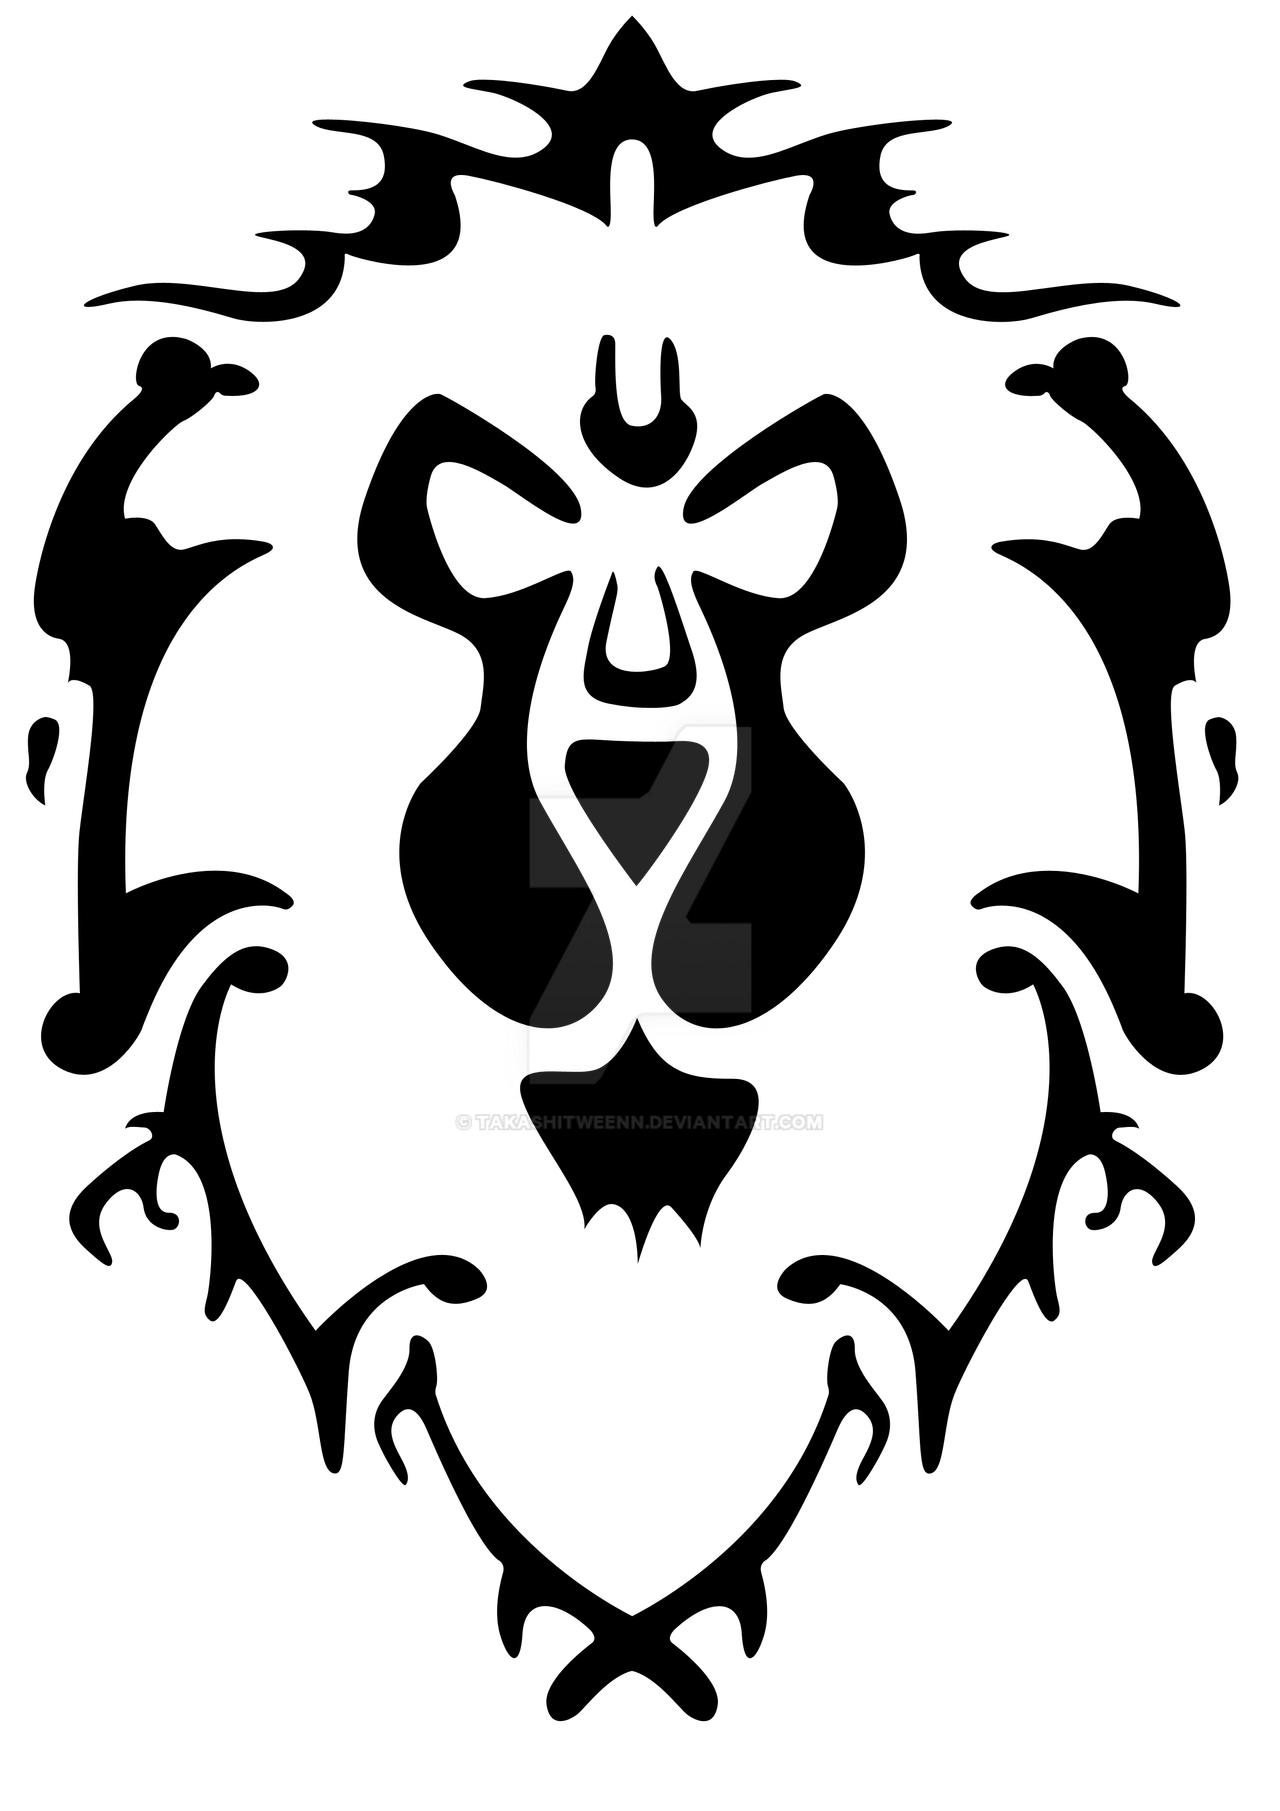 alliance-logo-by-takashitweenn-on-deviantart